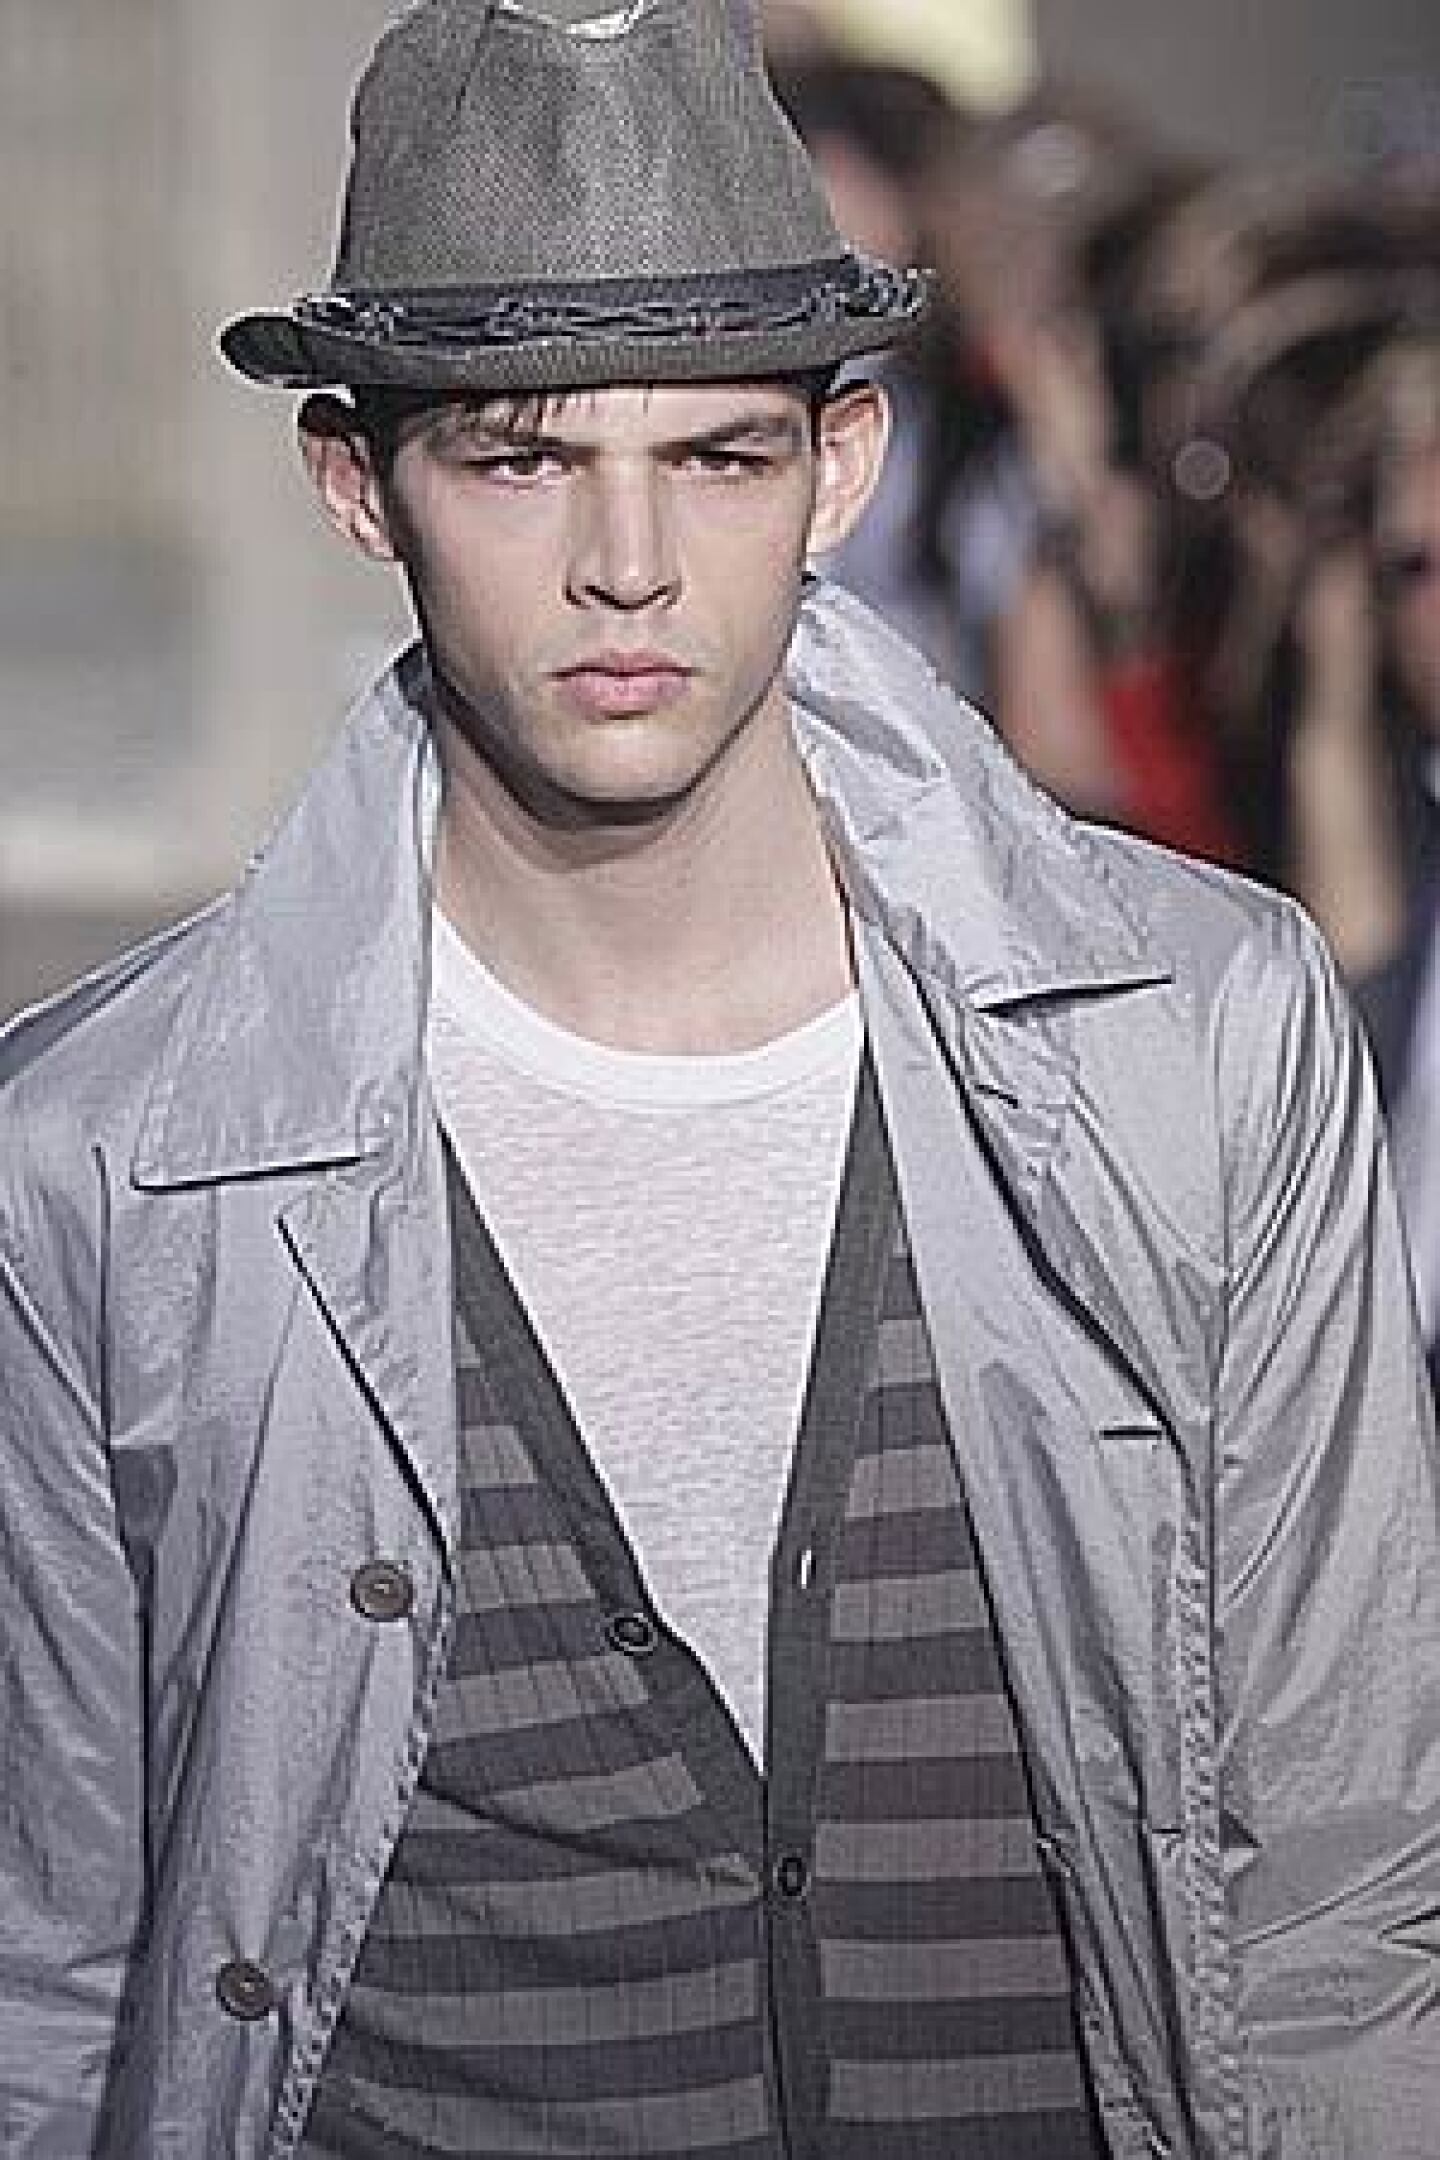 Trend alert: Woven hats shown at European men's shows - Los Angeles Times